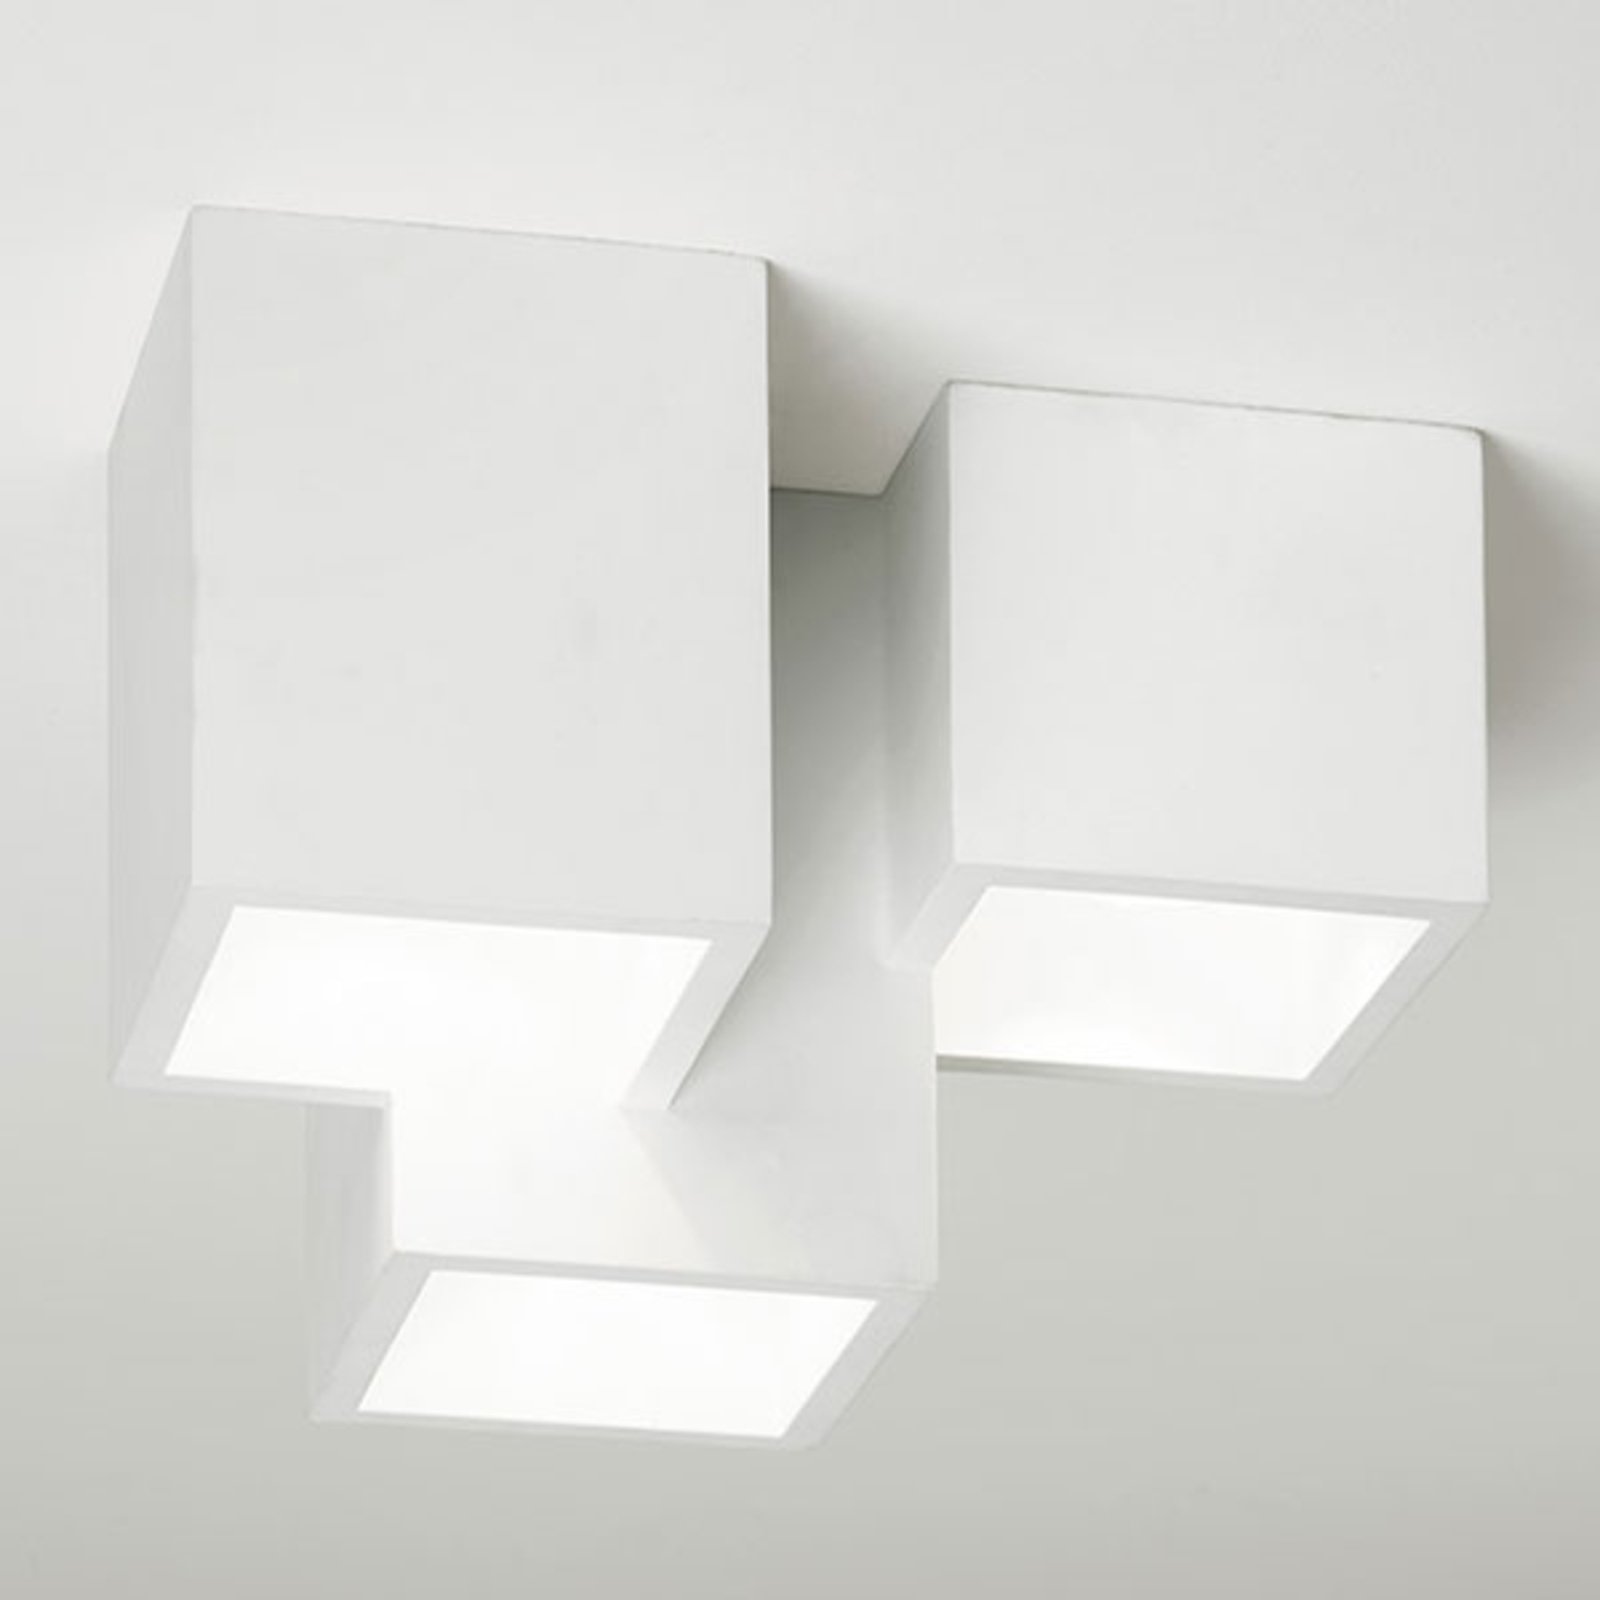 Heraea ceiling light with three plaster cuboids